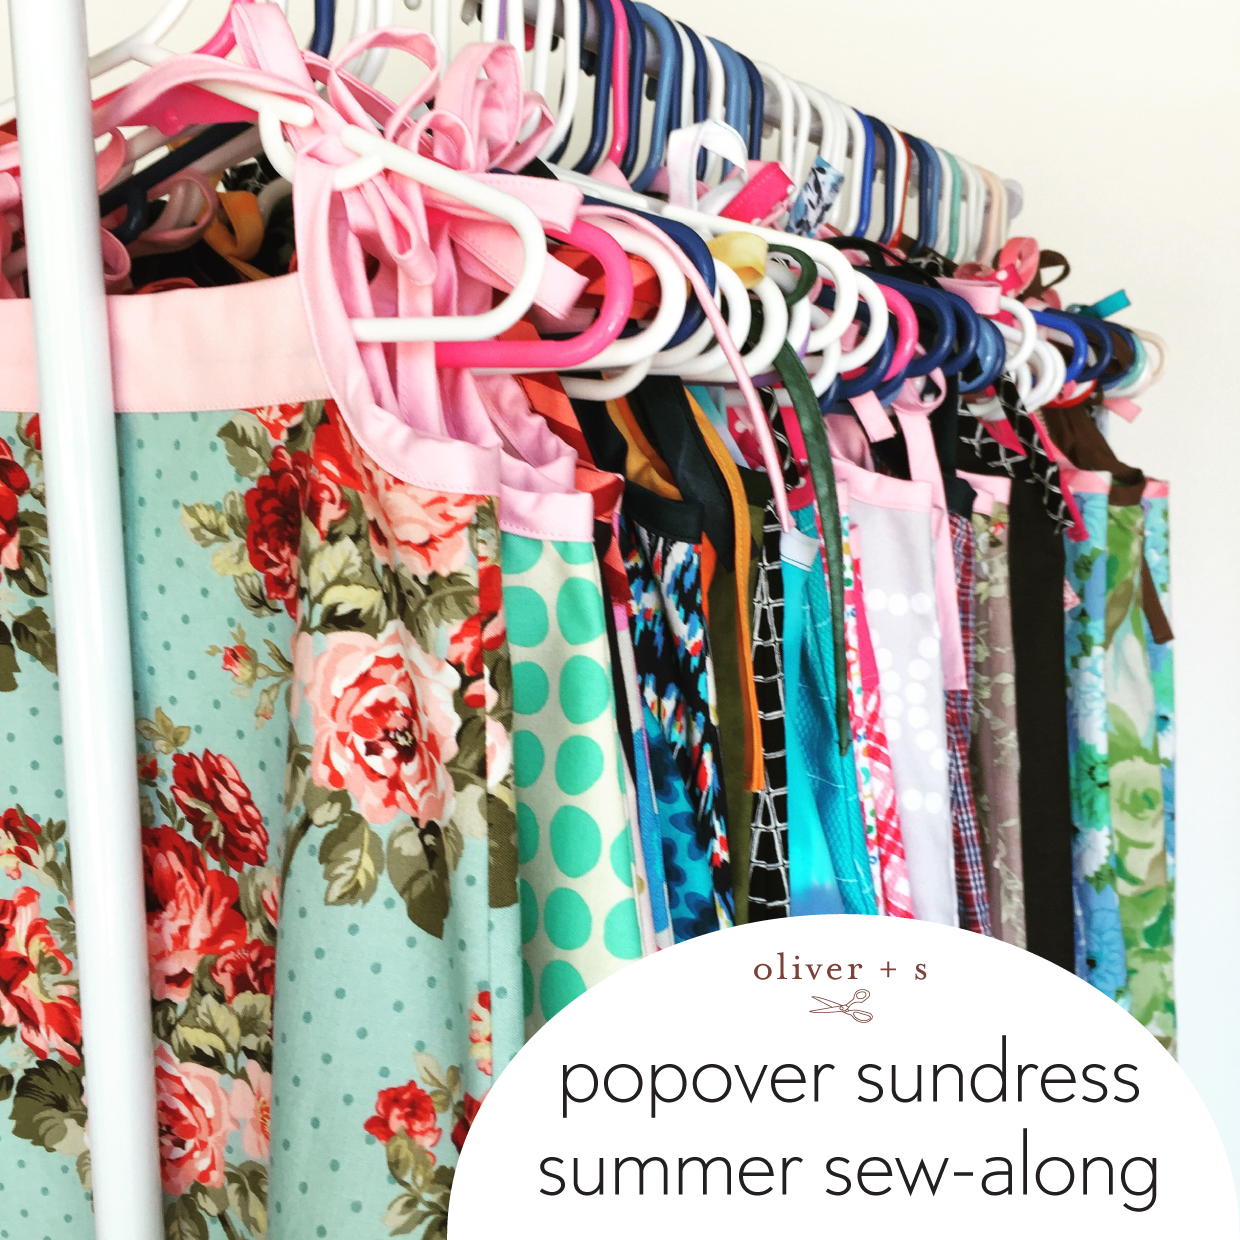 Announcing the Popover Sundress Summer Sew-Along | Blog | Oliver + S